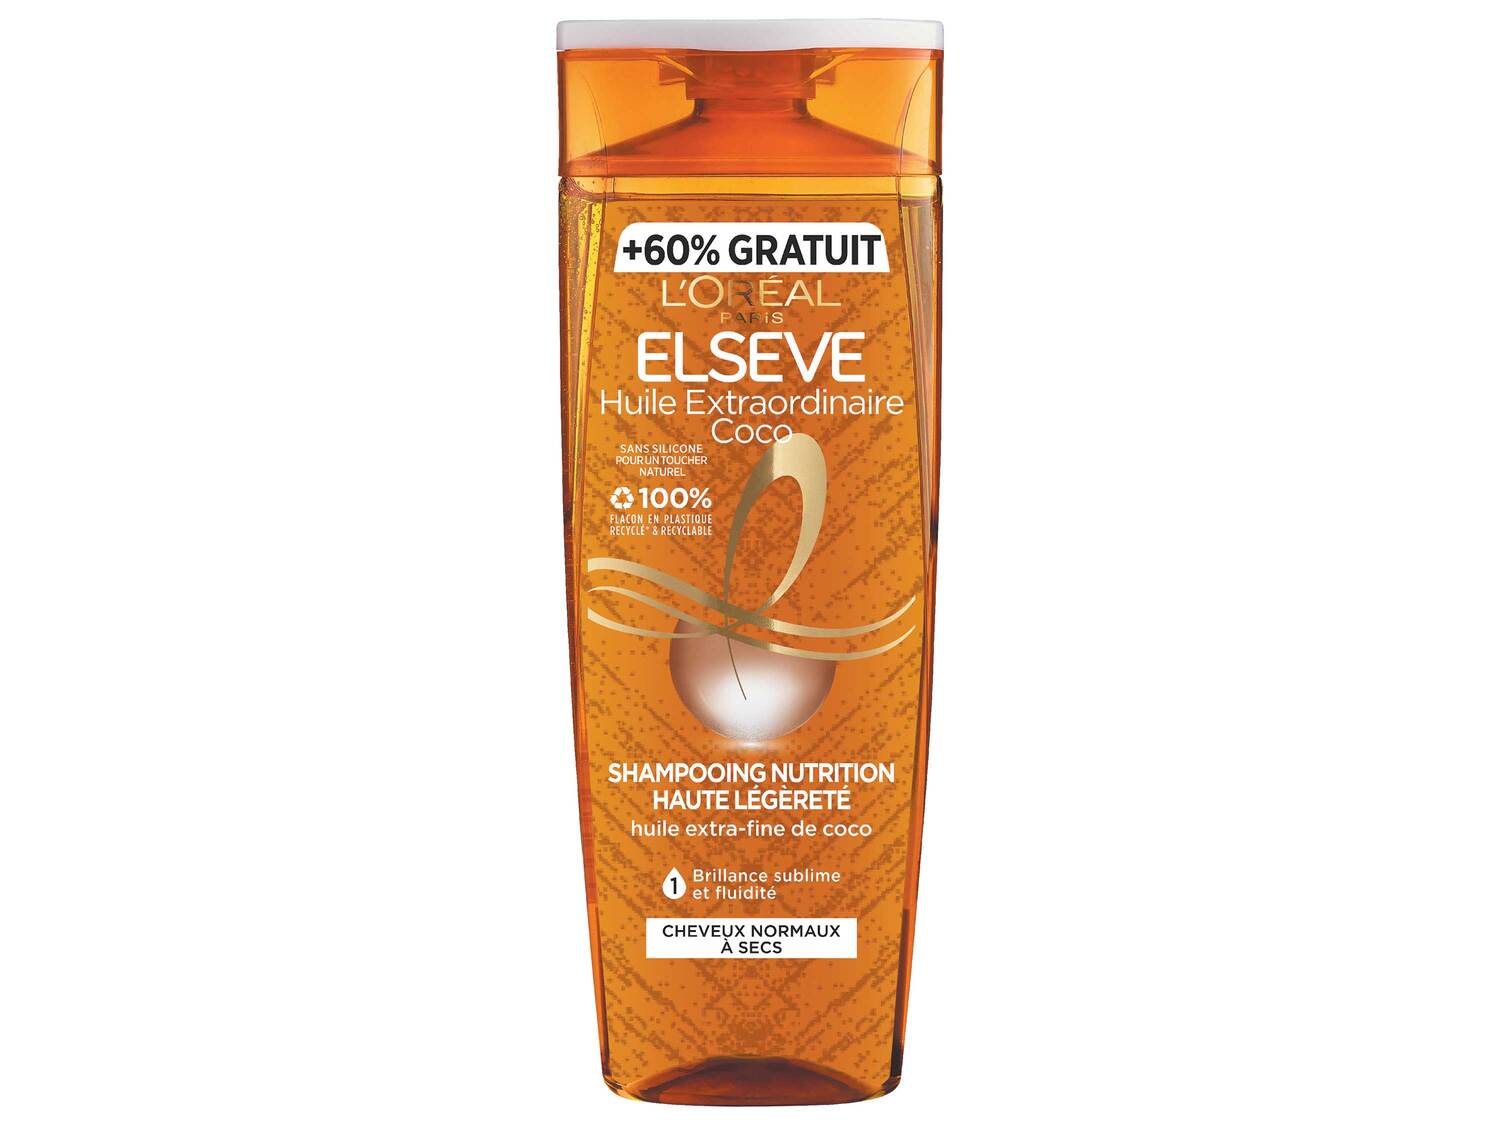 Elseve shampooing , le prix 3.30 &#8364; 
- 250 ml + 150 ml OFFERTS
- Au choix ...